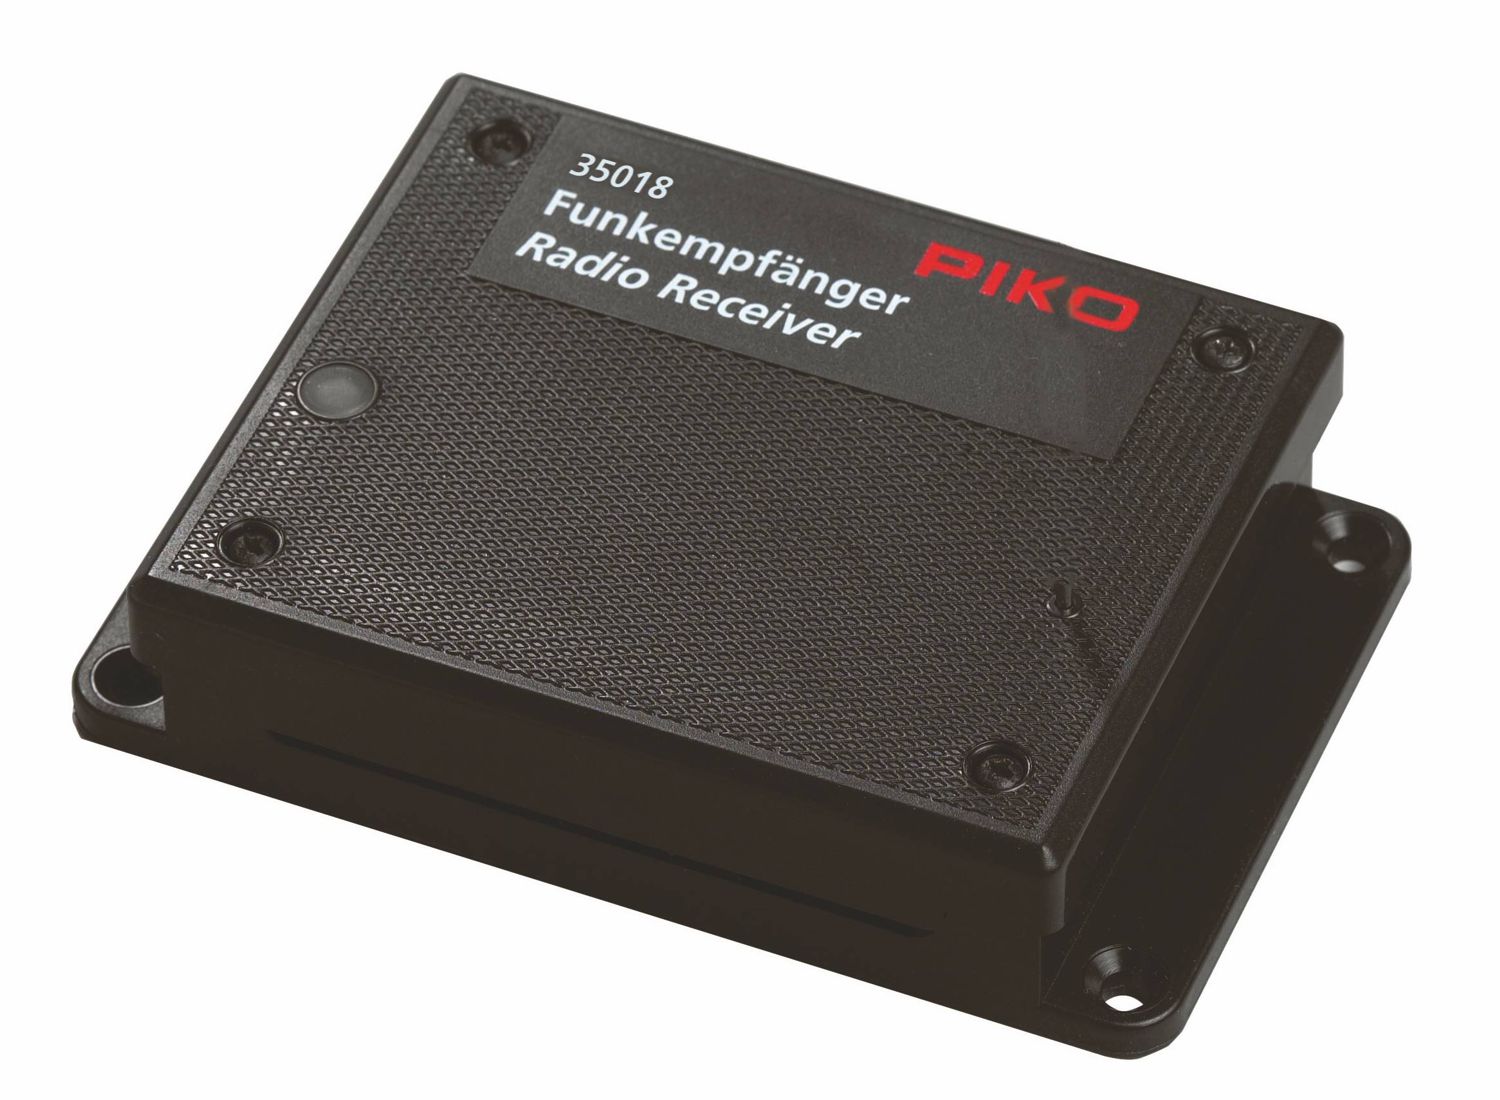 Piko 35038 - Funkempfänger, 2,4 GHz, V2.0